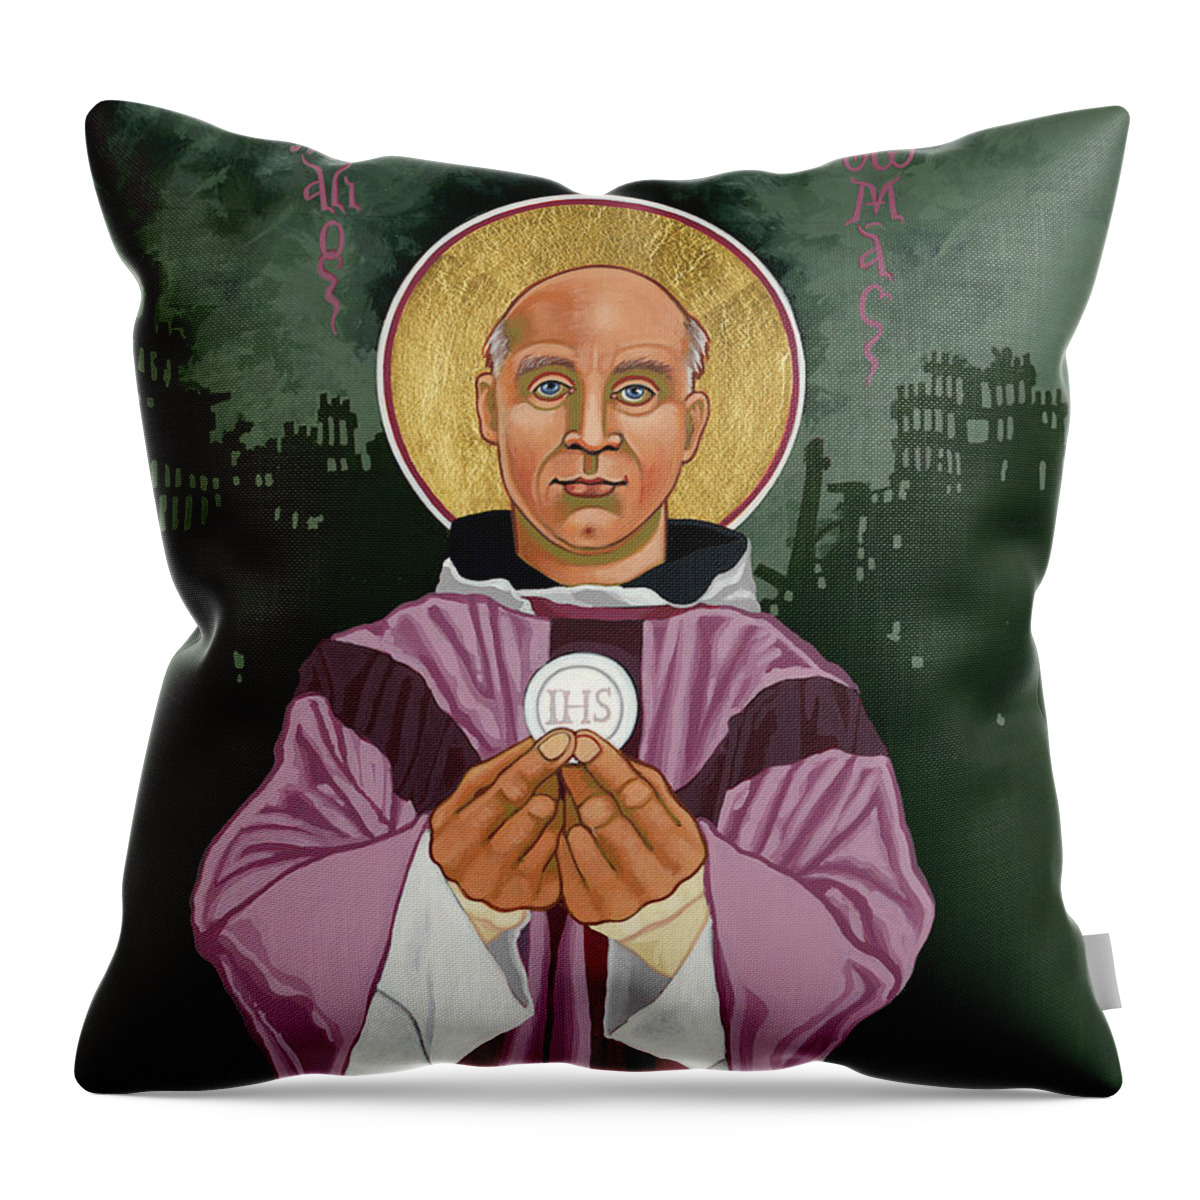 Holy Prophet Thomas Merton Throw Pillow featuring the painting Holy Prophet Thomas Merton - Gaudete Christus est natus by William Hart McNichols